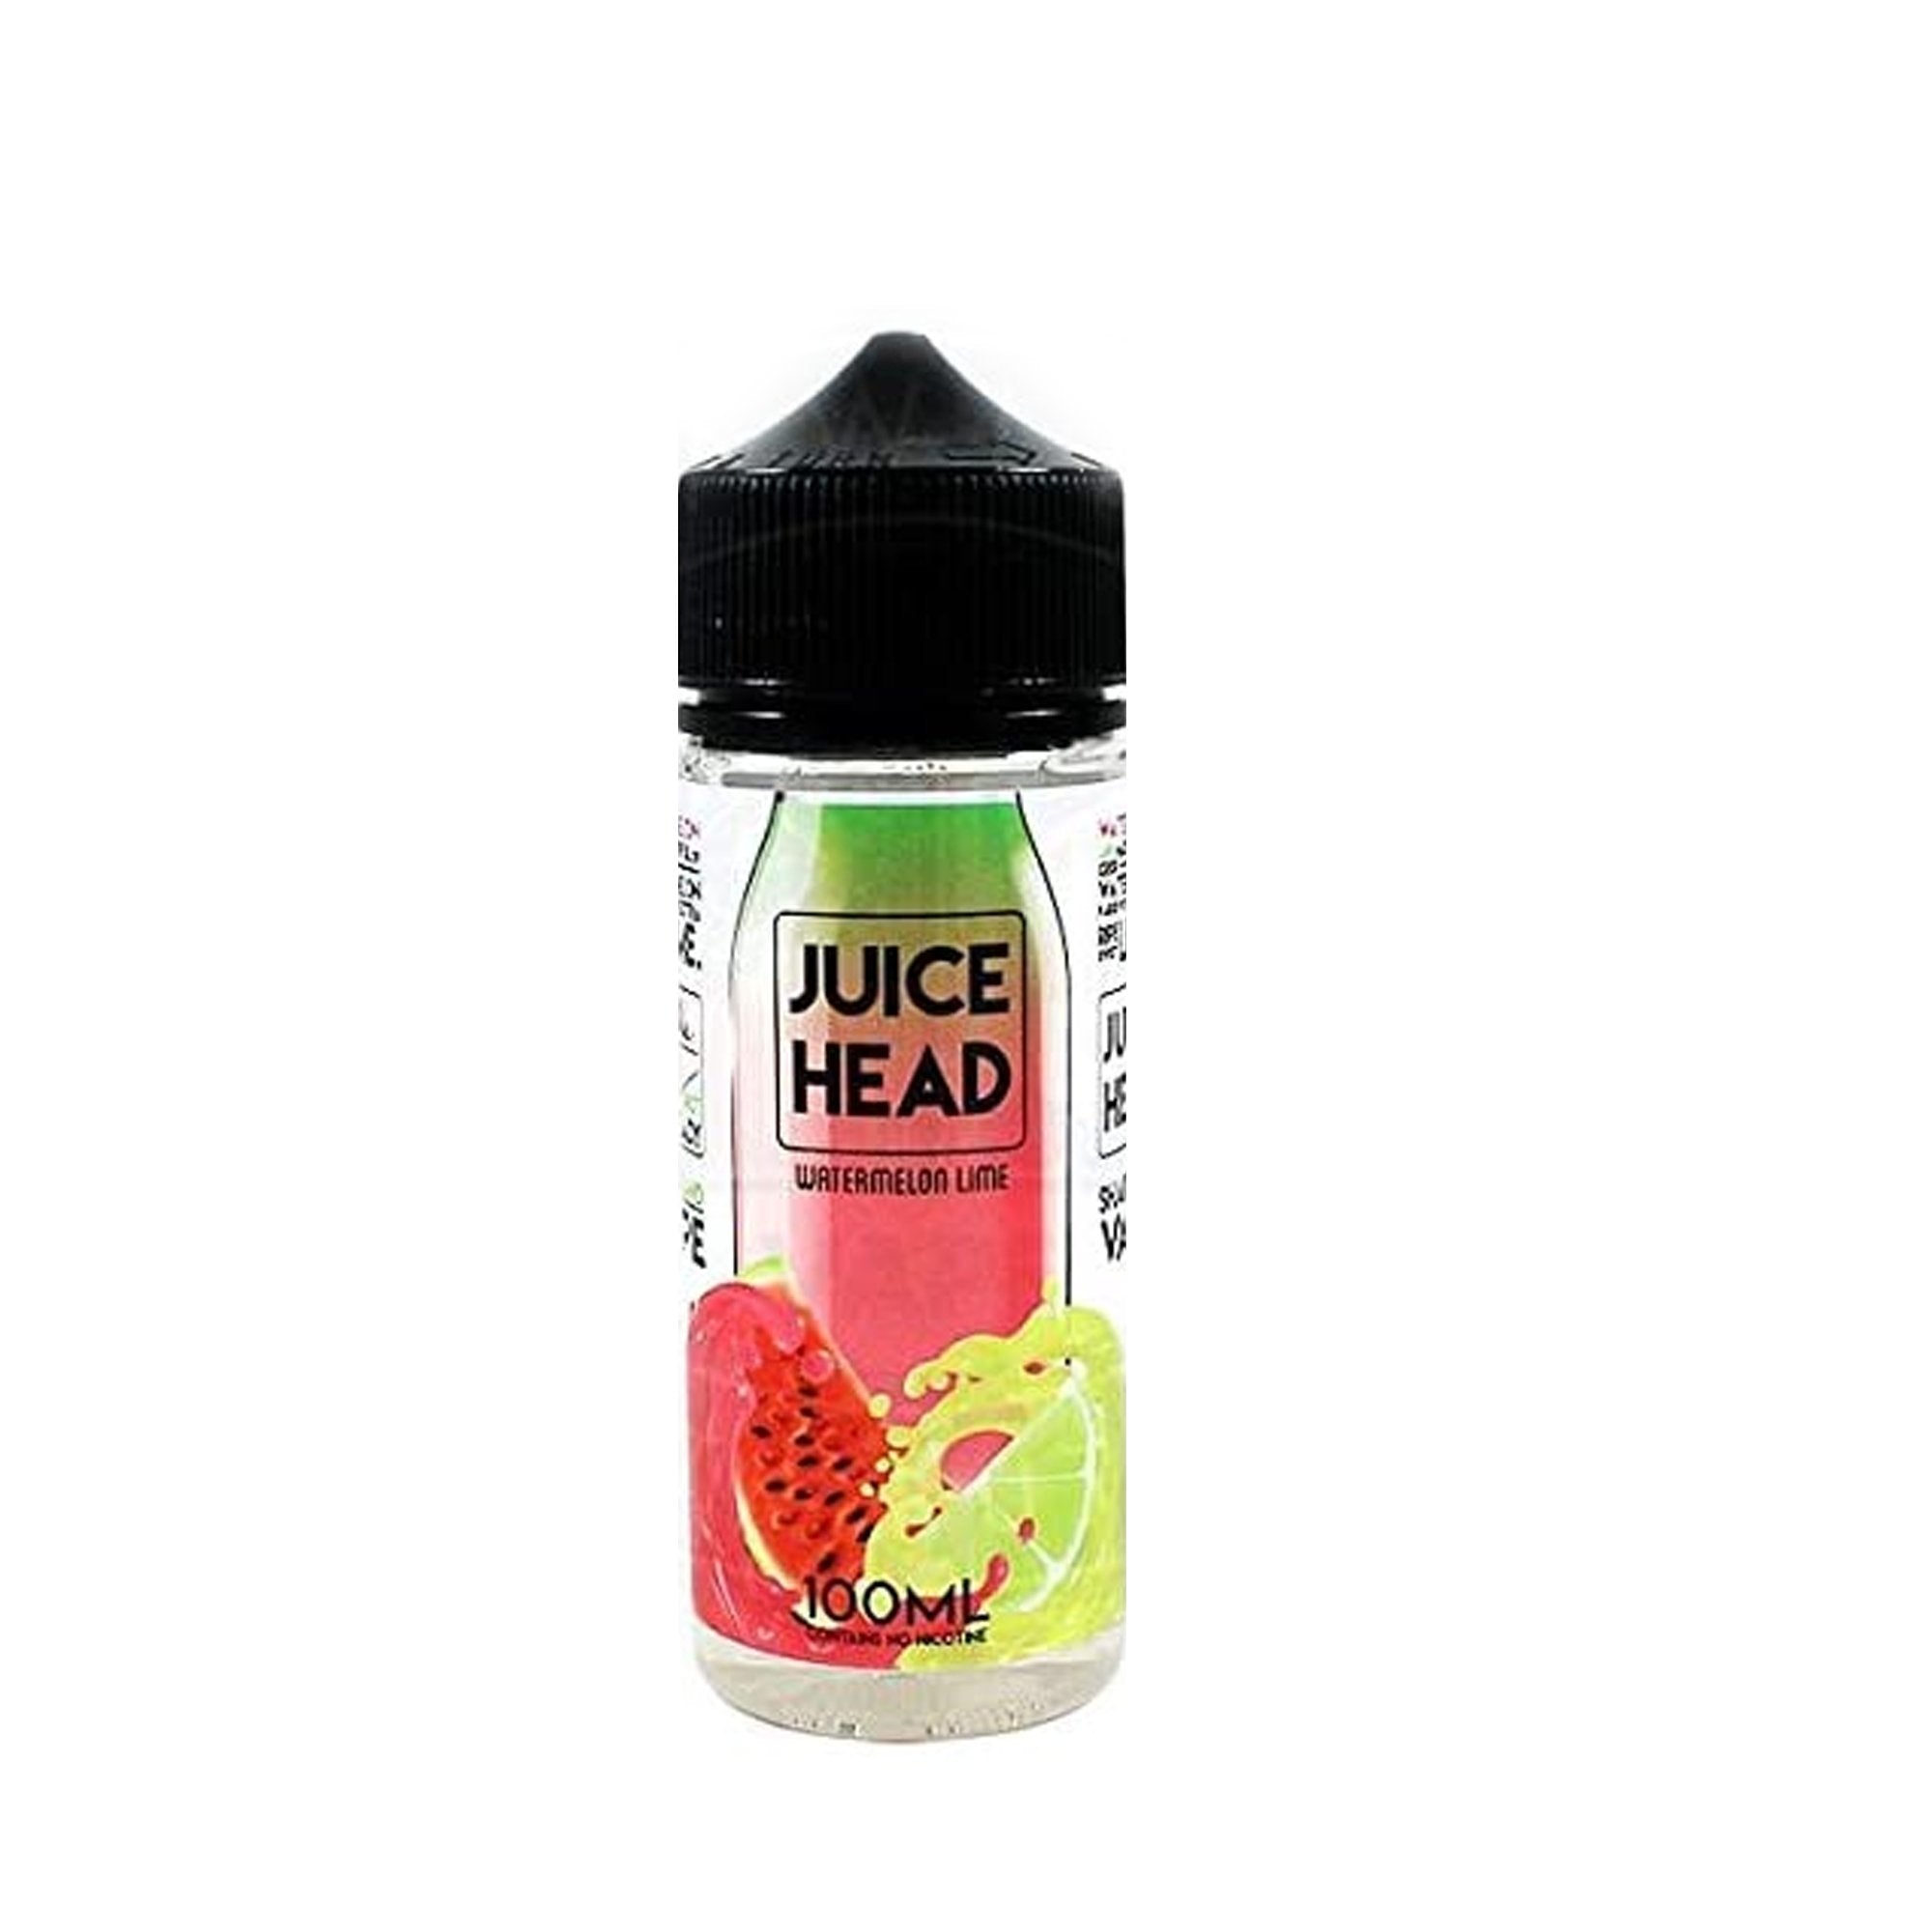 Juice Head Shortfill 120ml E-Liquid - Wolfvapes.co.uk-Watermelon Lime